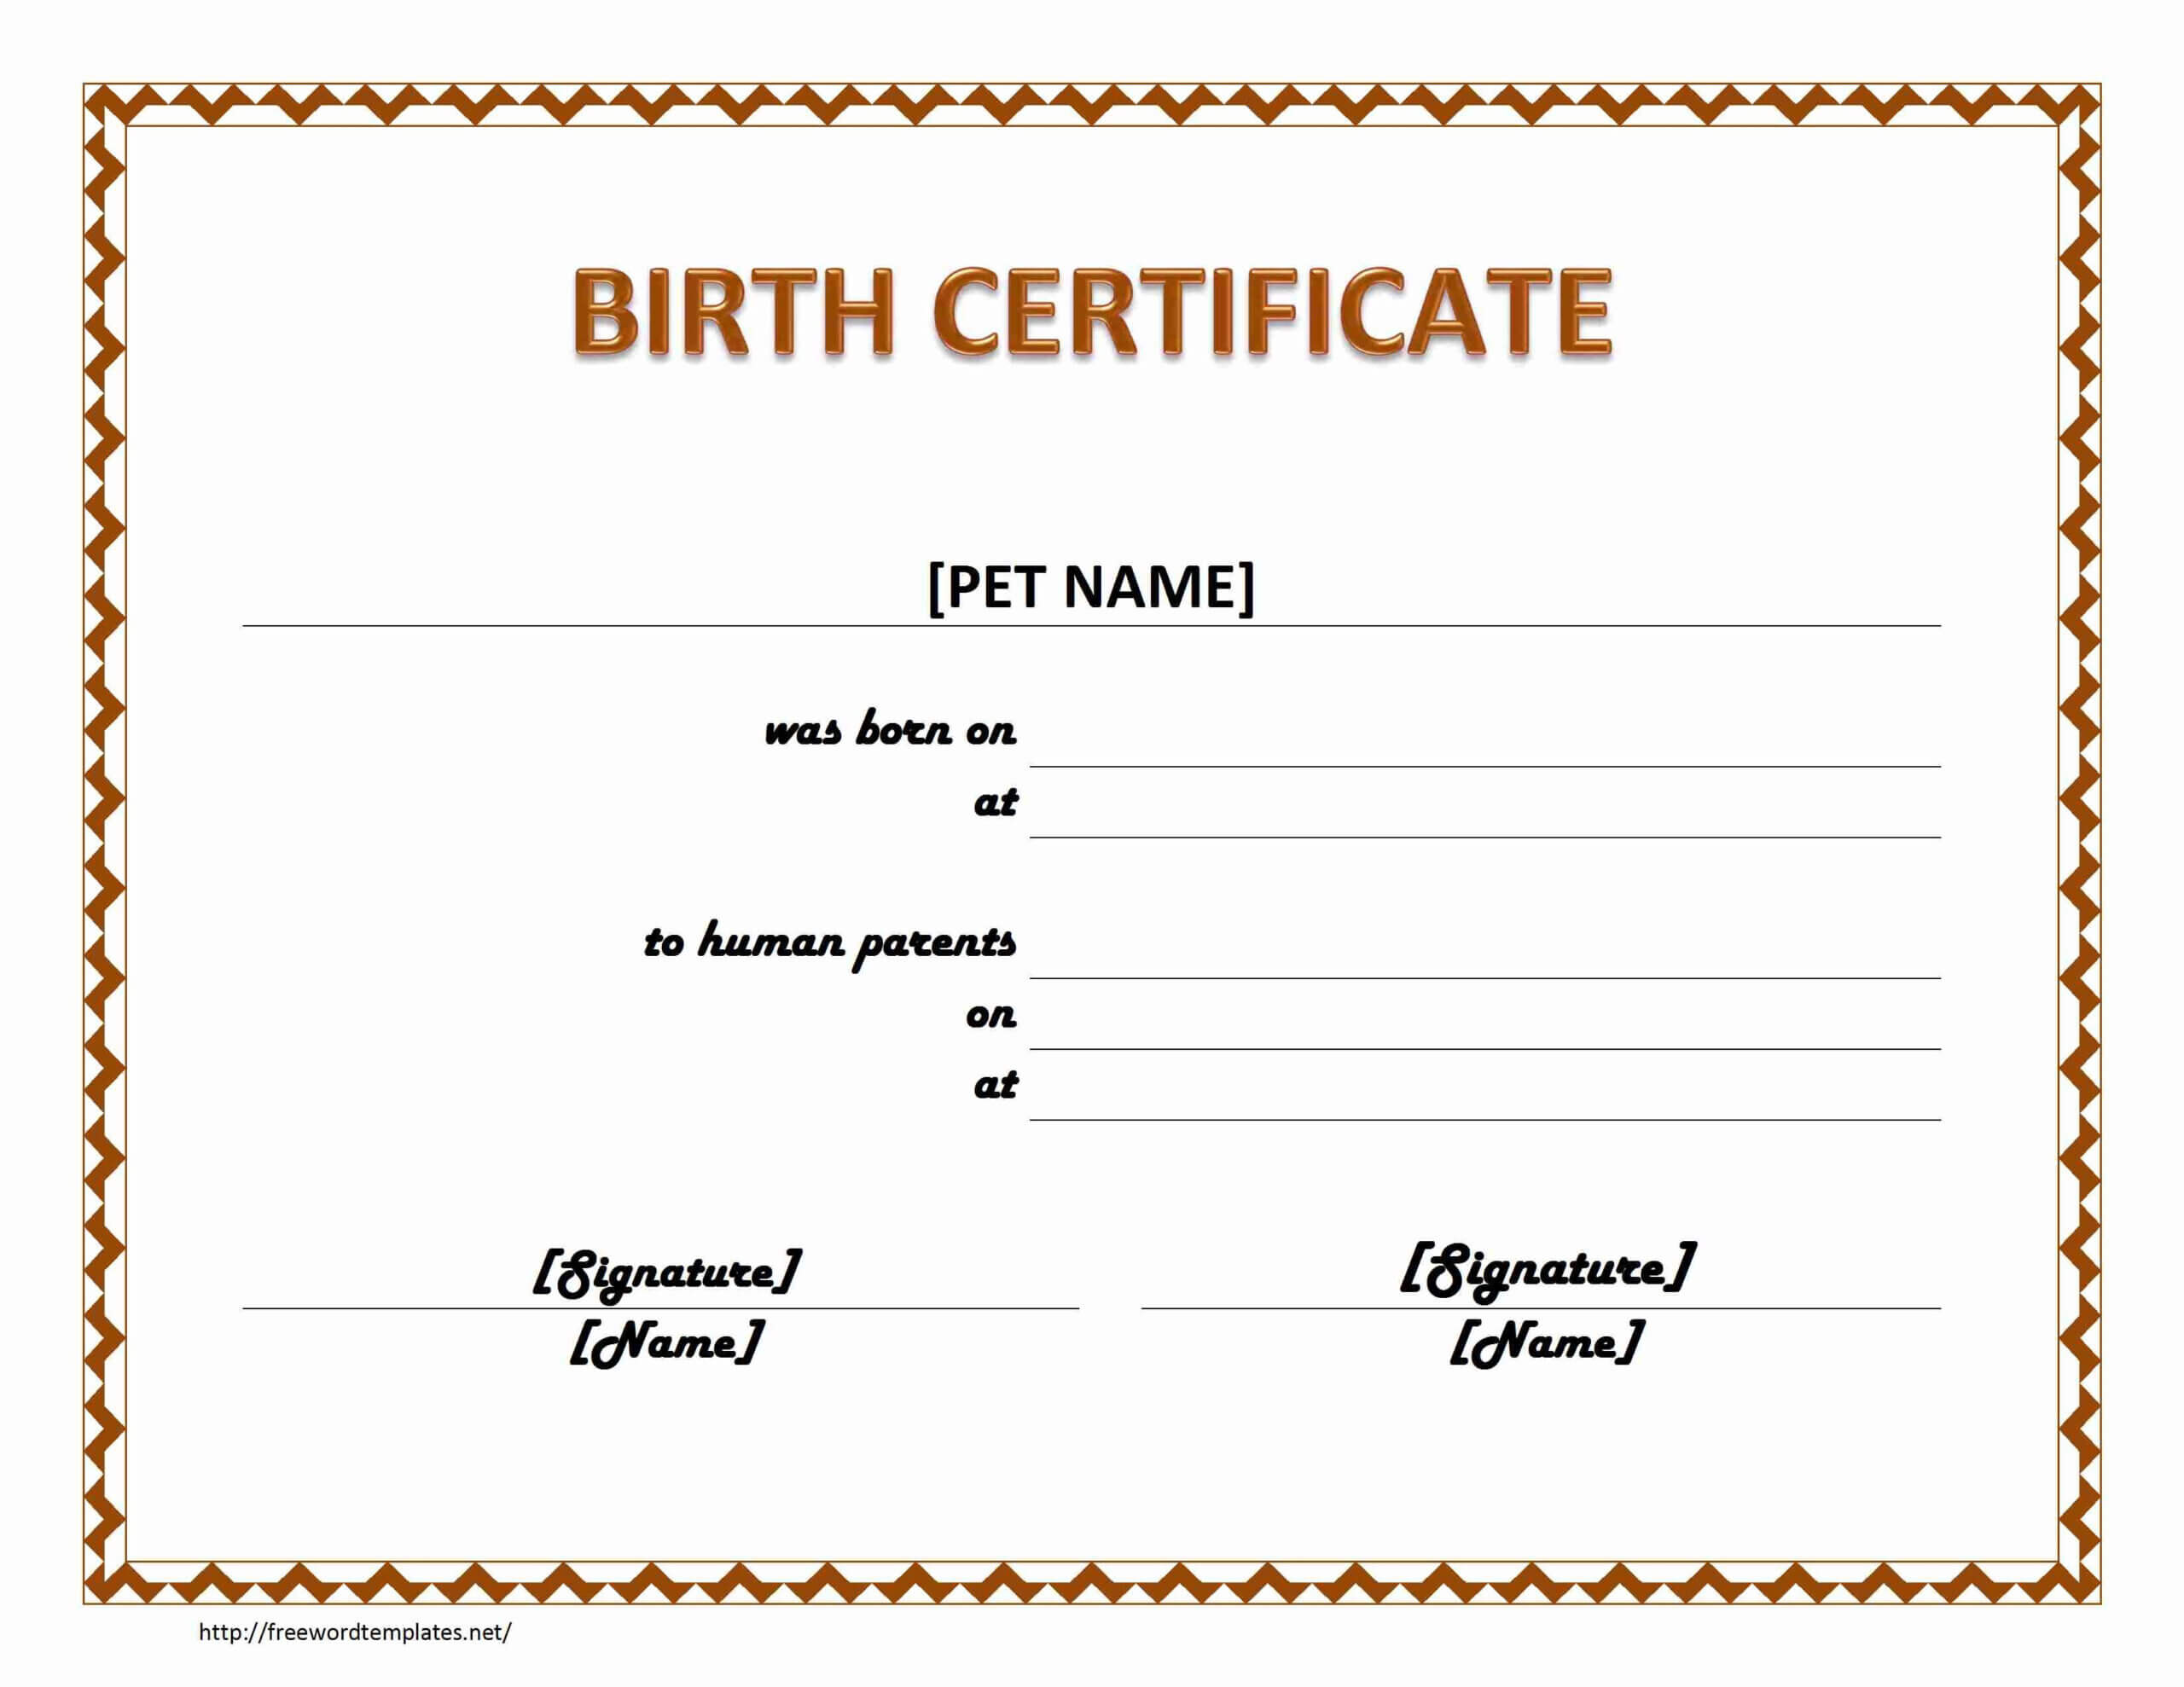 Pet Birth Certificate Maker | Pet Birth Certificate For Word In Service Dog Certificate Template